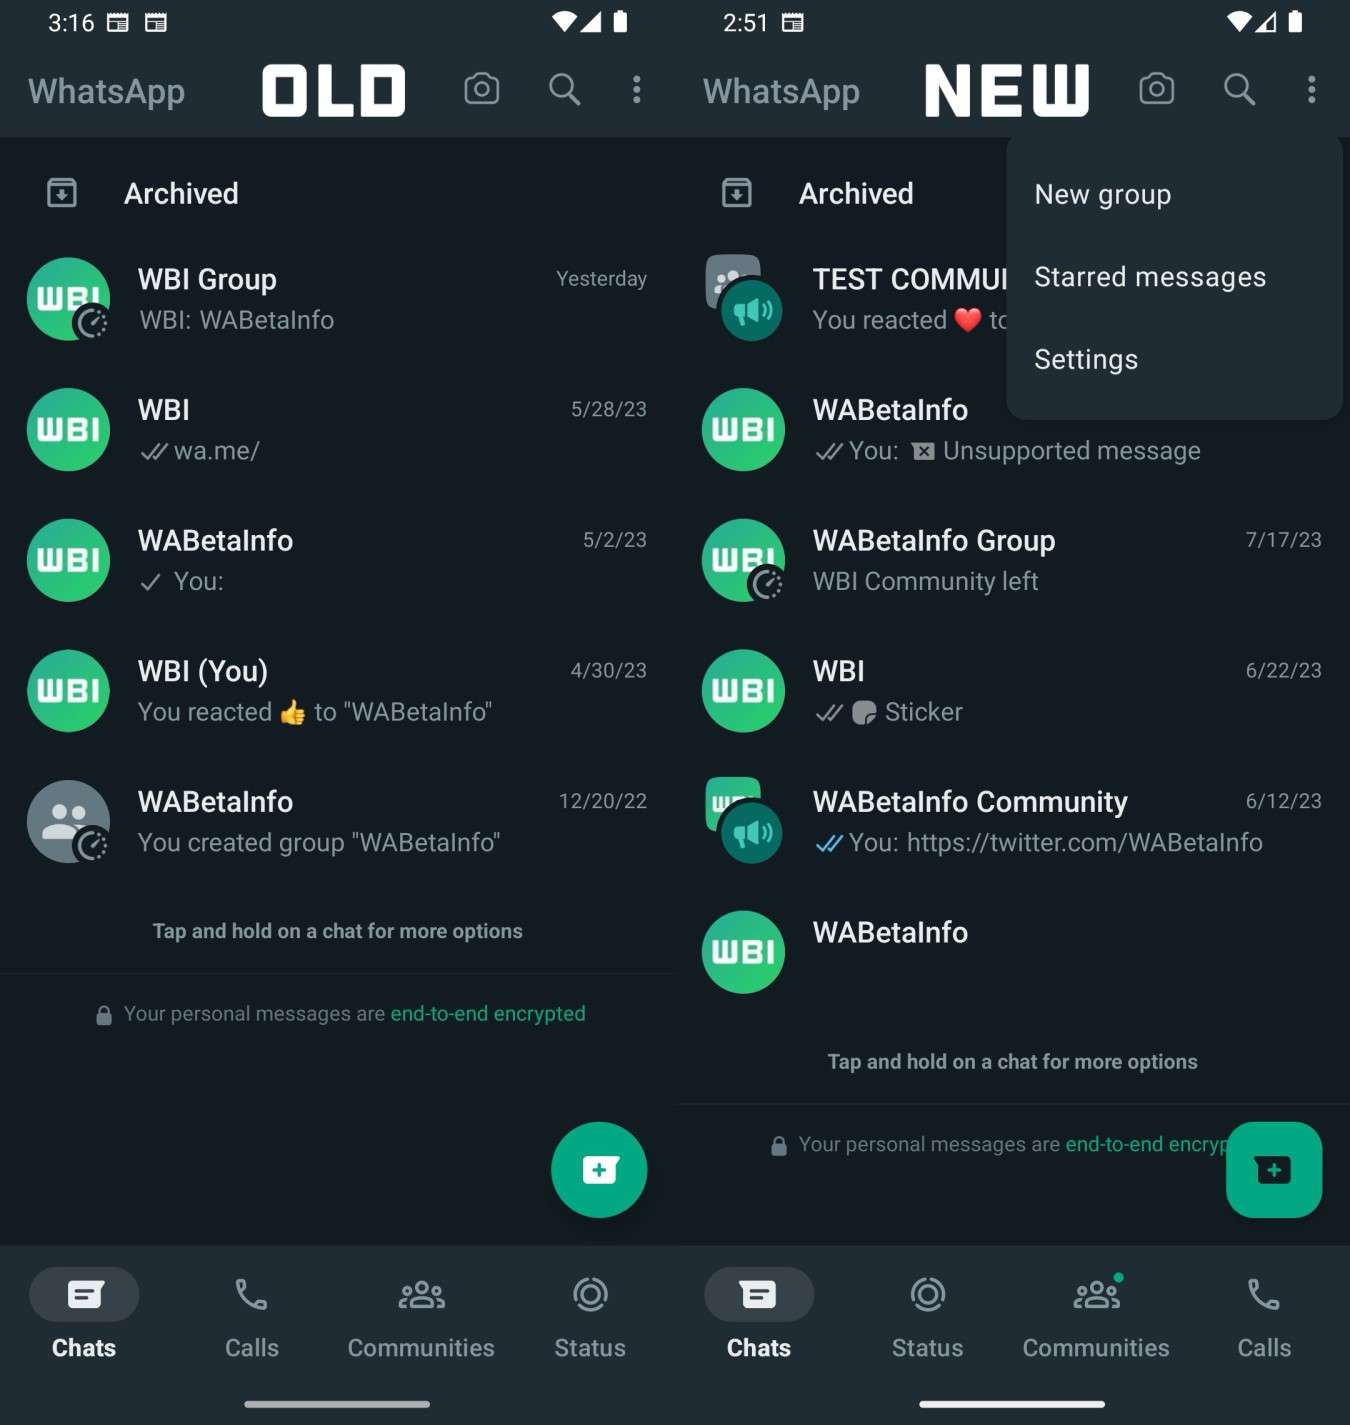 WhatsApp Material Design 3 Beta Android